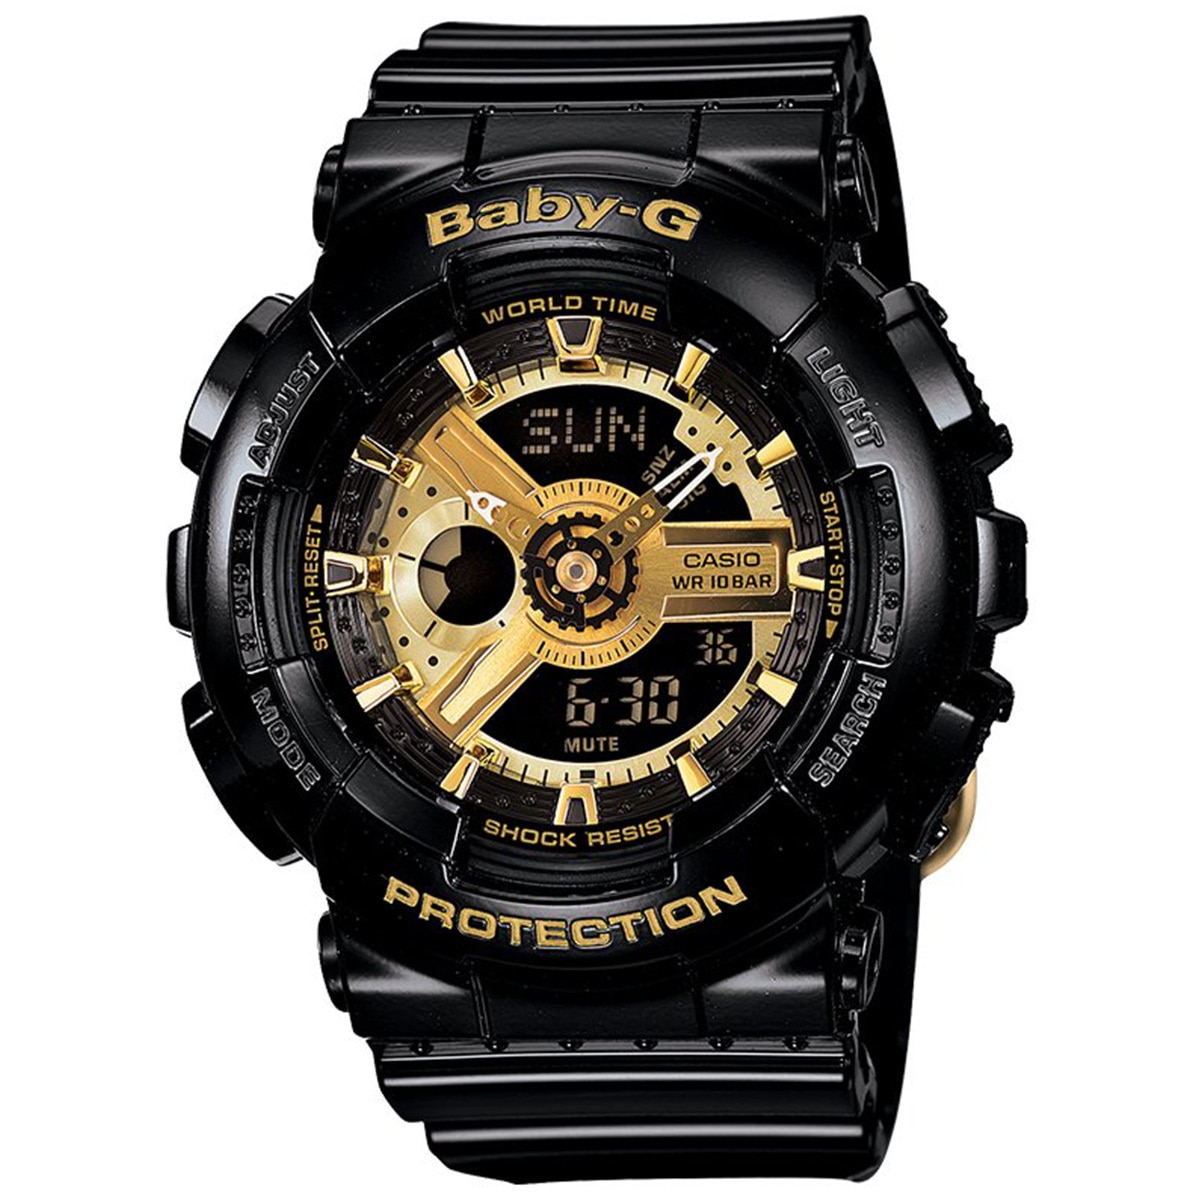 Casio Baby-G BA110-1A LDS - Black Gold Watch